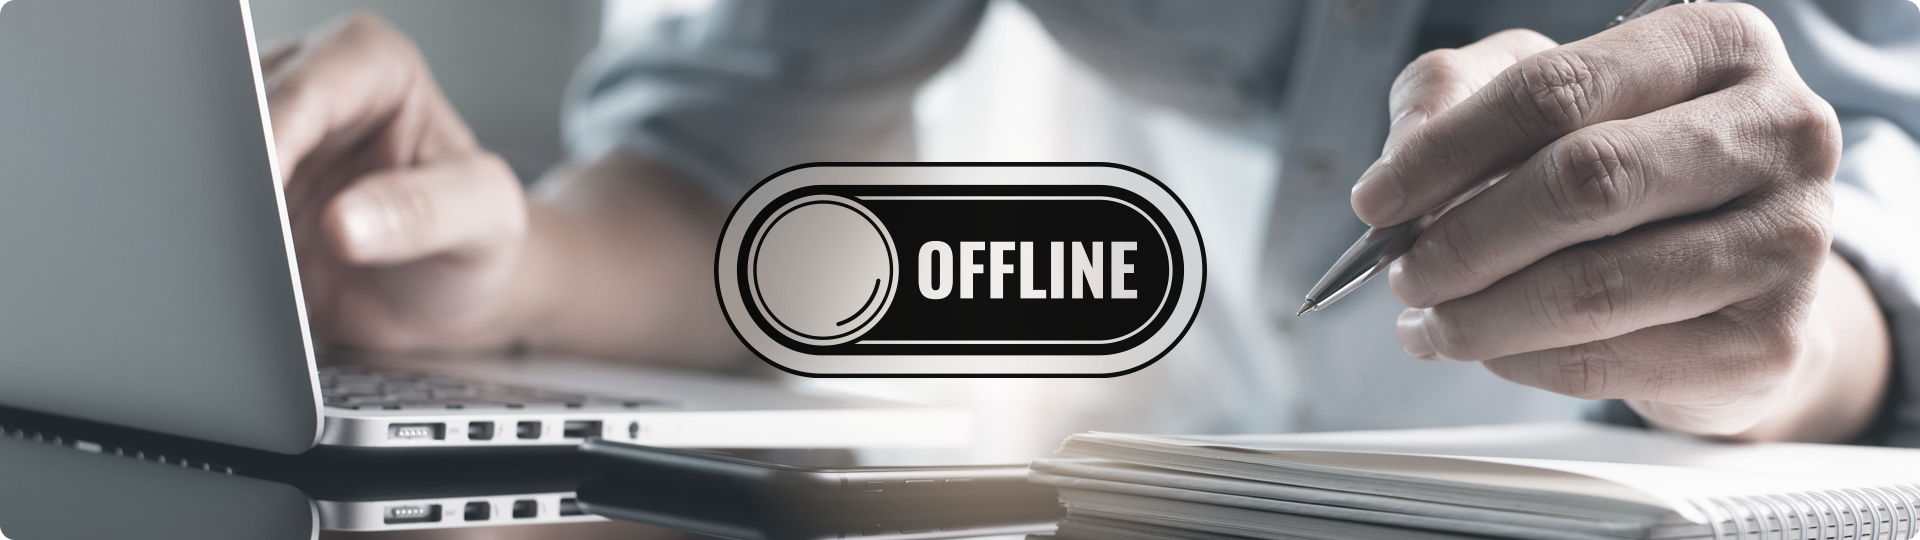 offlineplayer